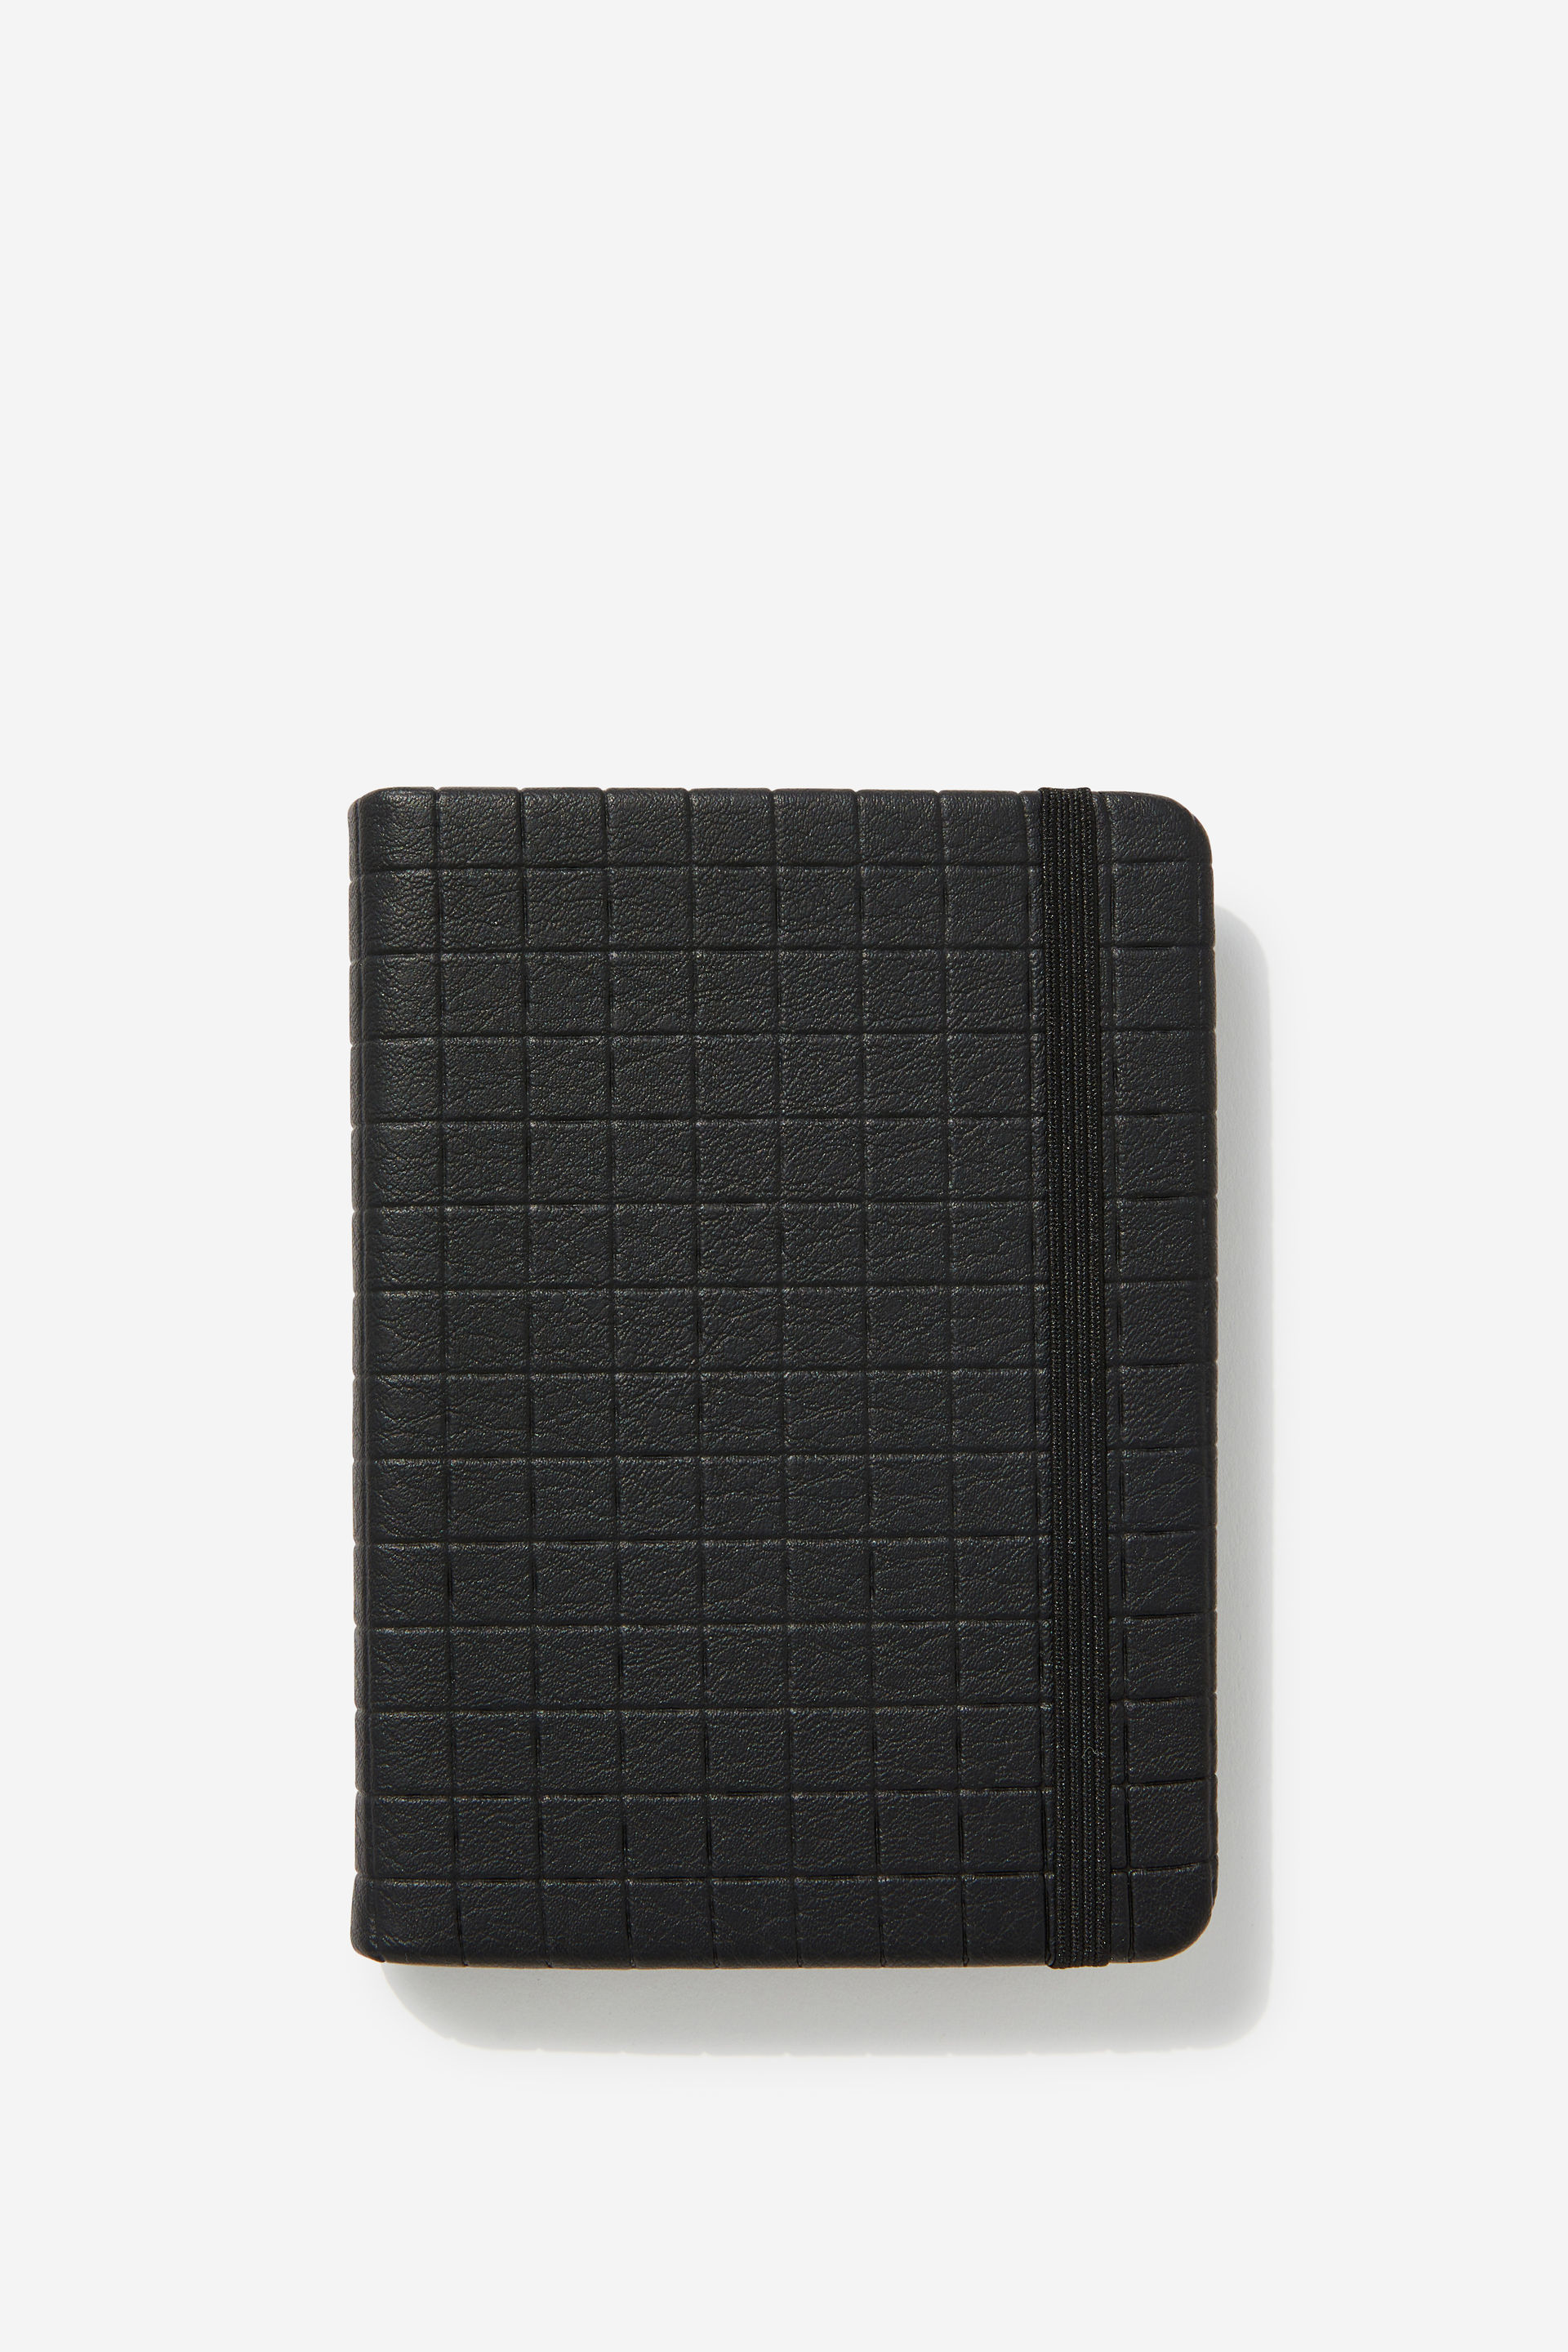 Typo - A6 Premium Buffalo Journal - Grid black debossed